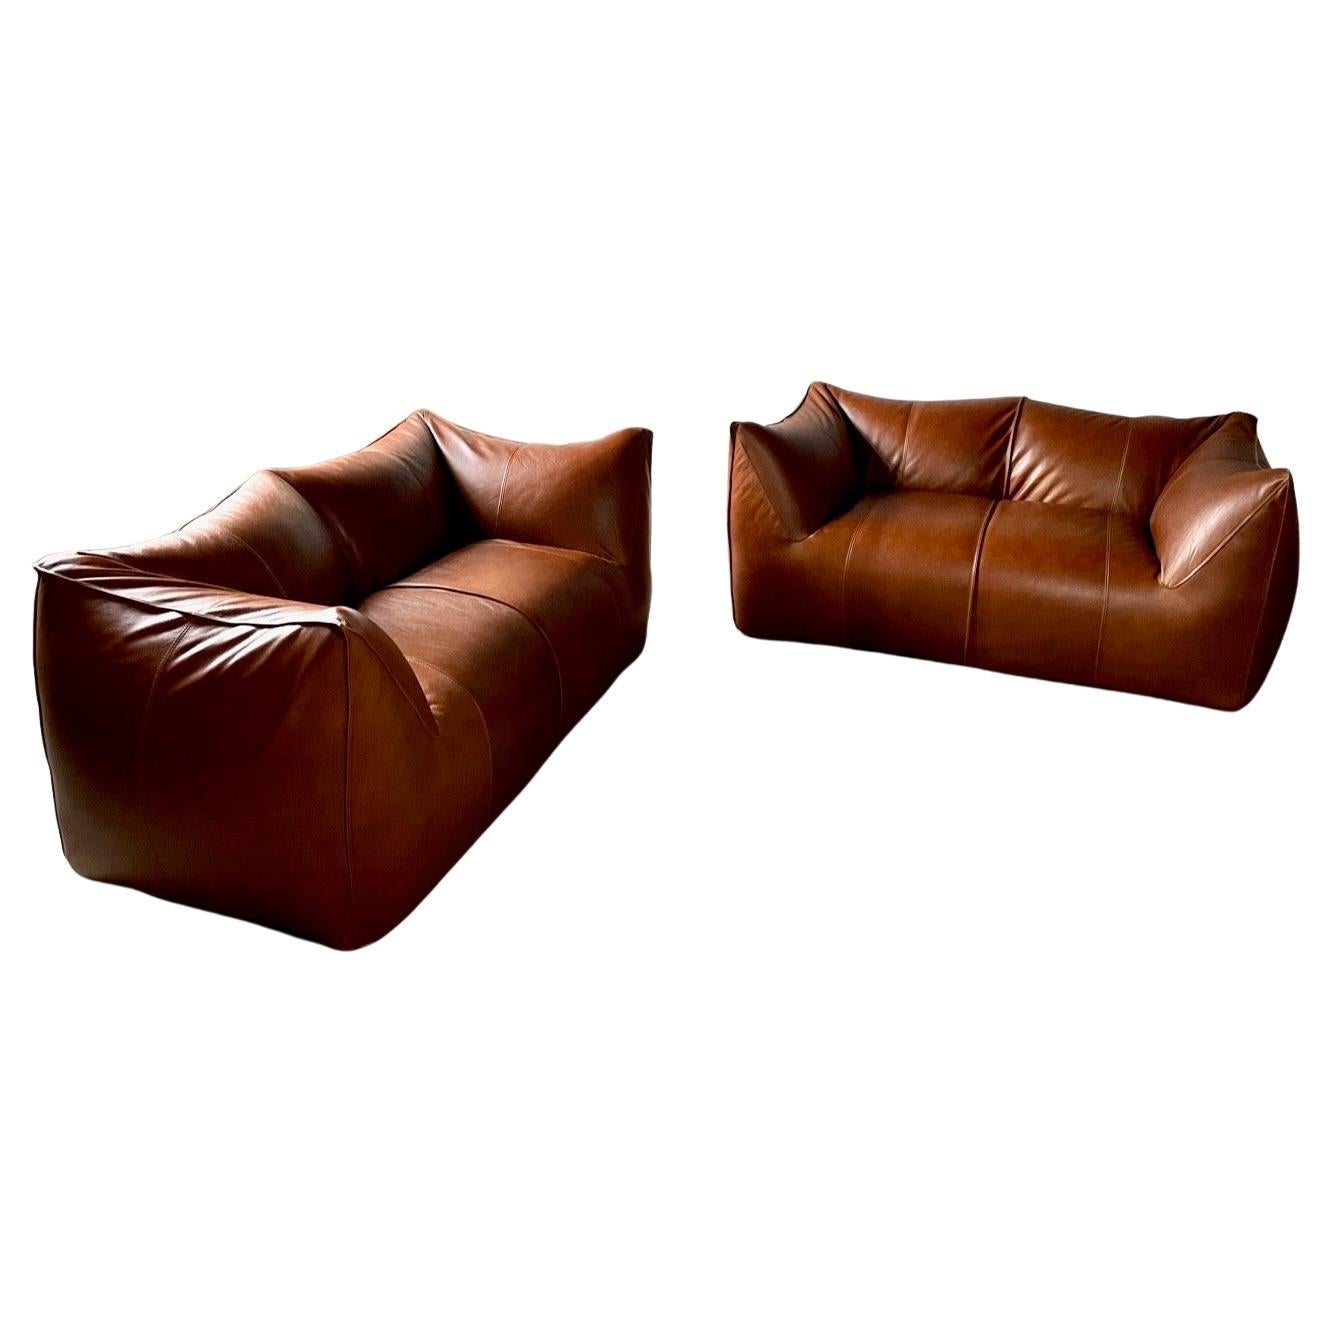 Stock of Three Le Bambole Sofa’s in Cognac Leather, Mario Bellini for B&B Italia